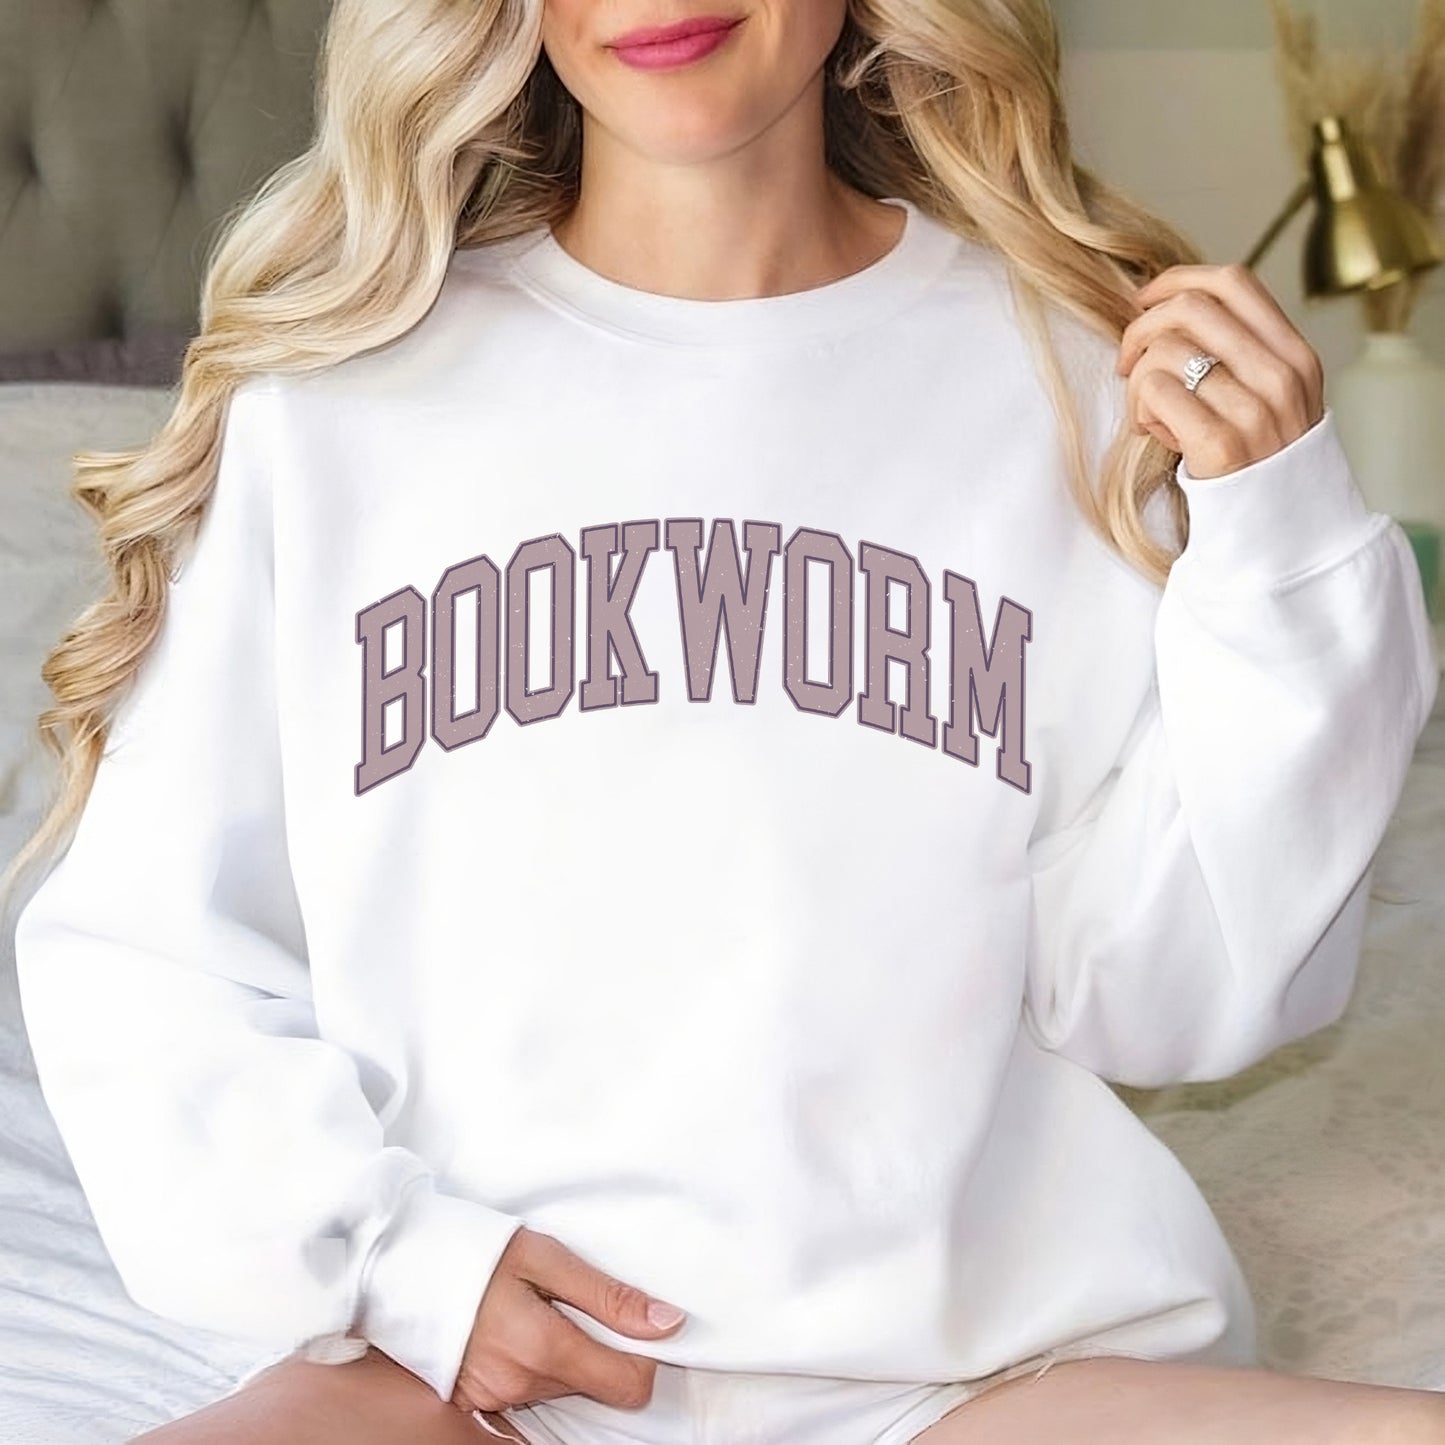 Bookworm T-Shirt, Book Club Gift